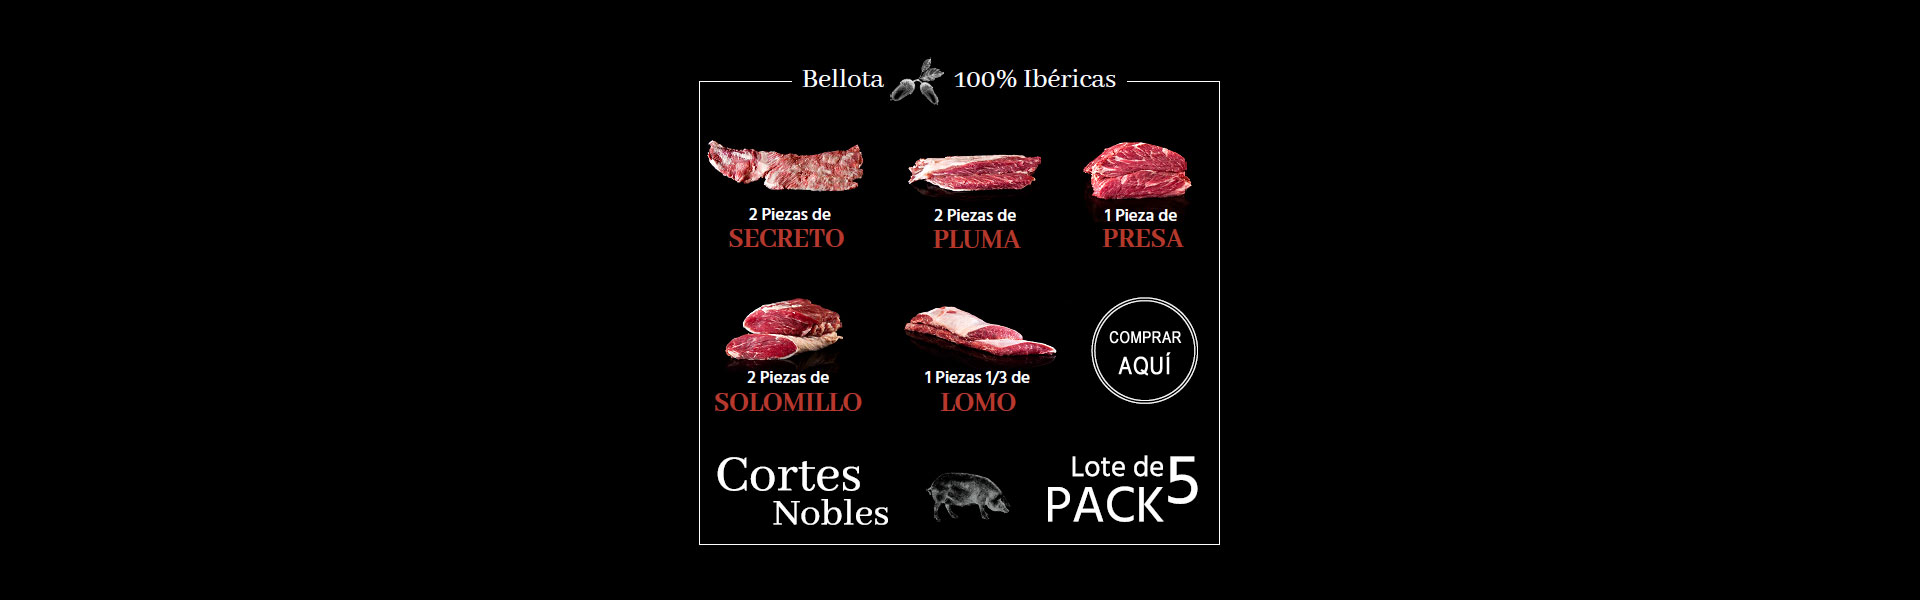 Carne de Bellota 100% Ibérico